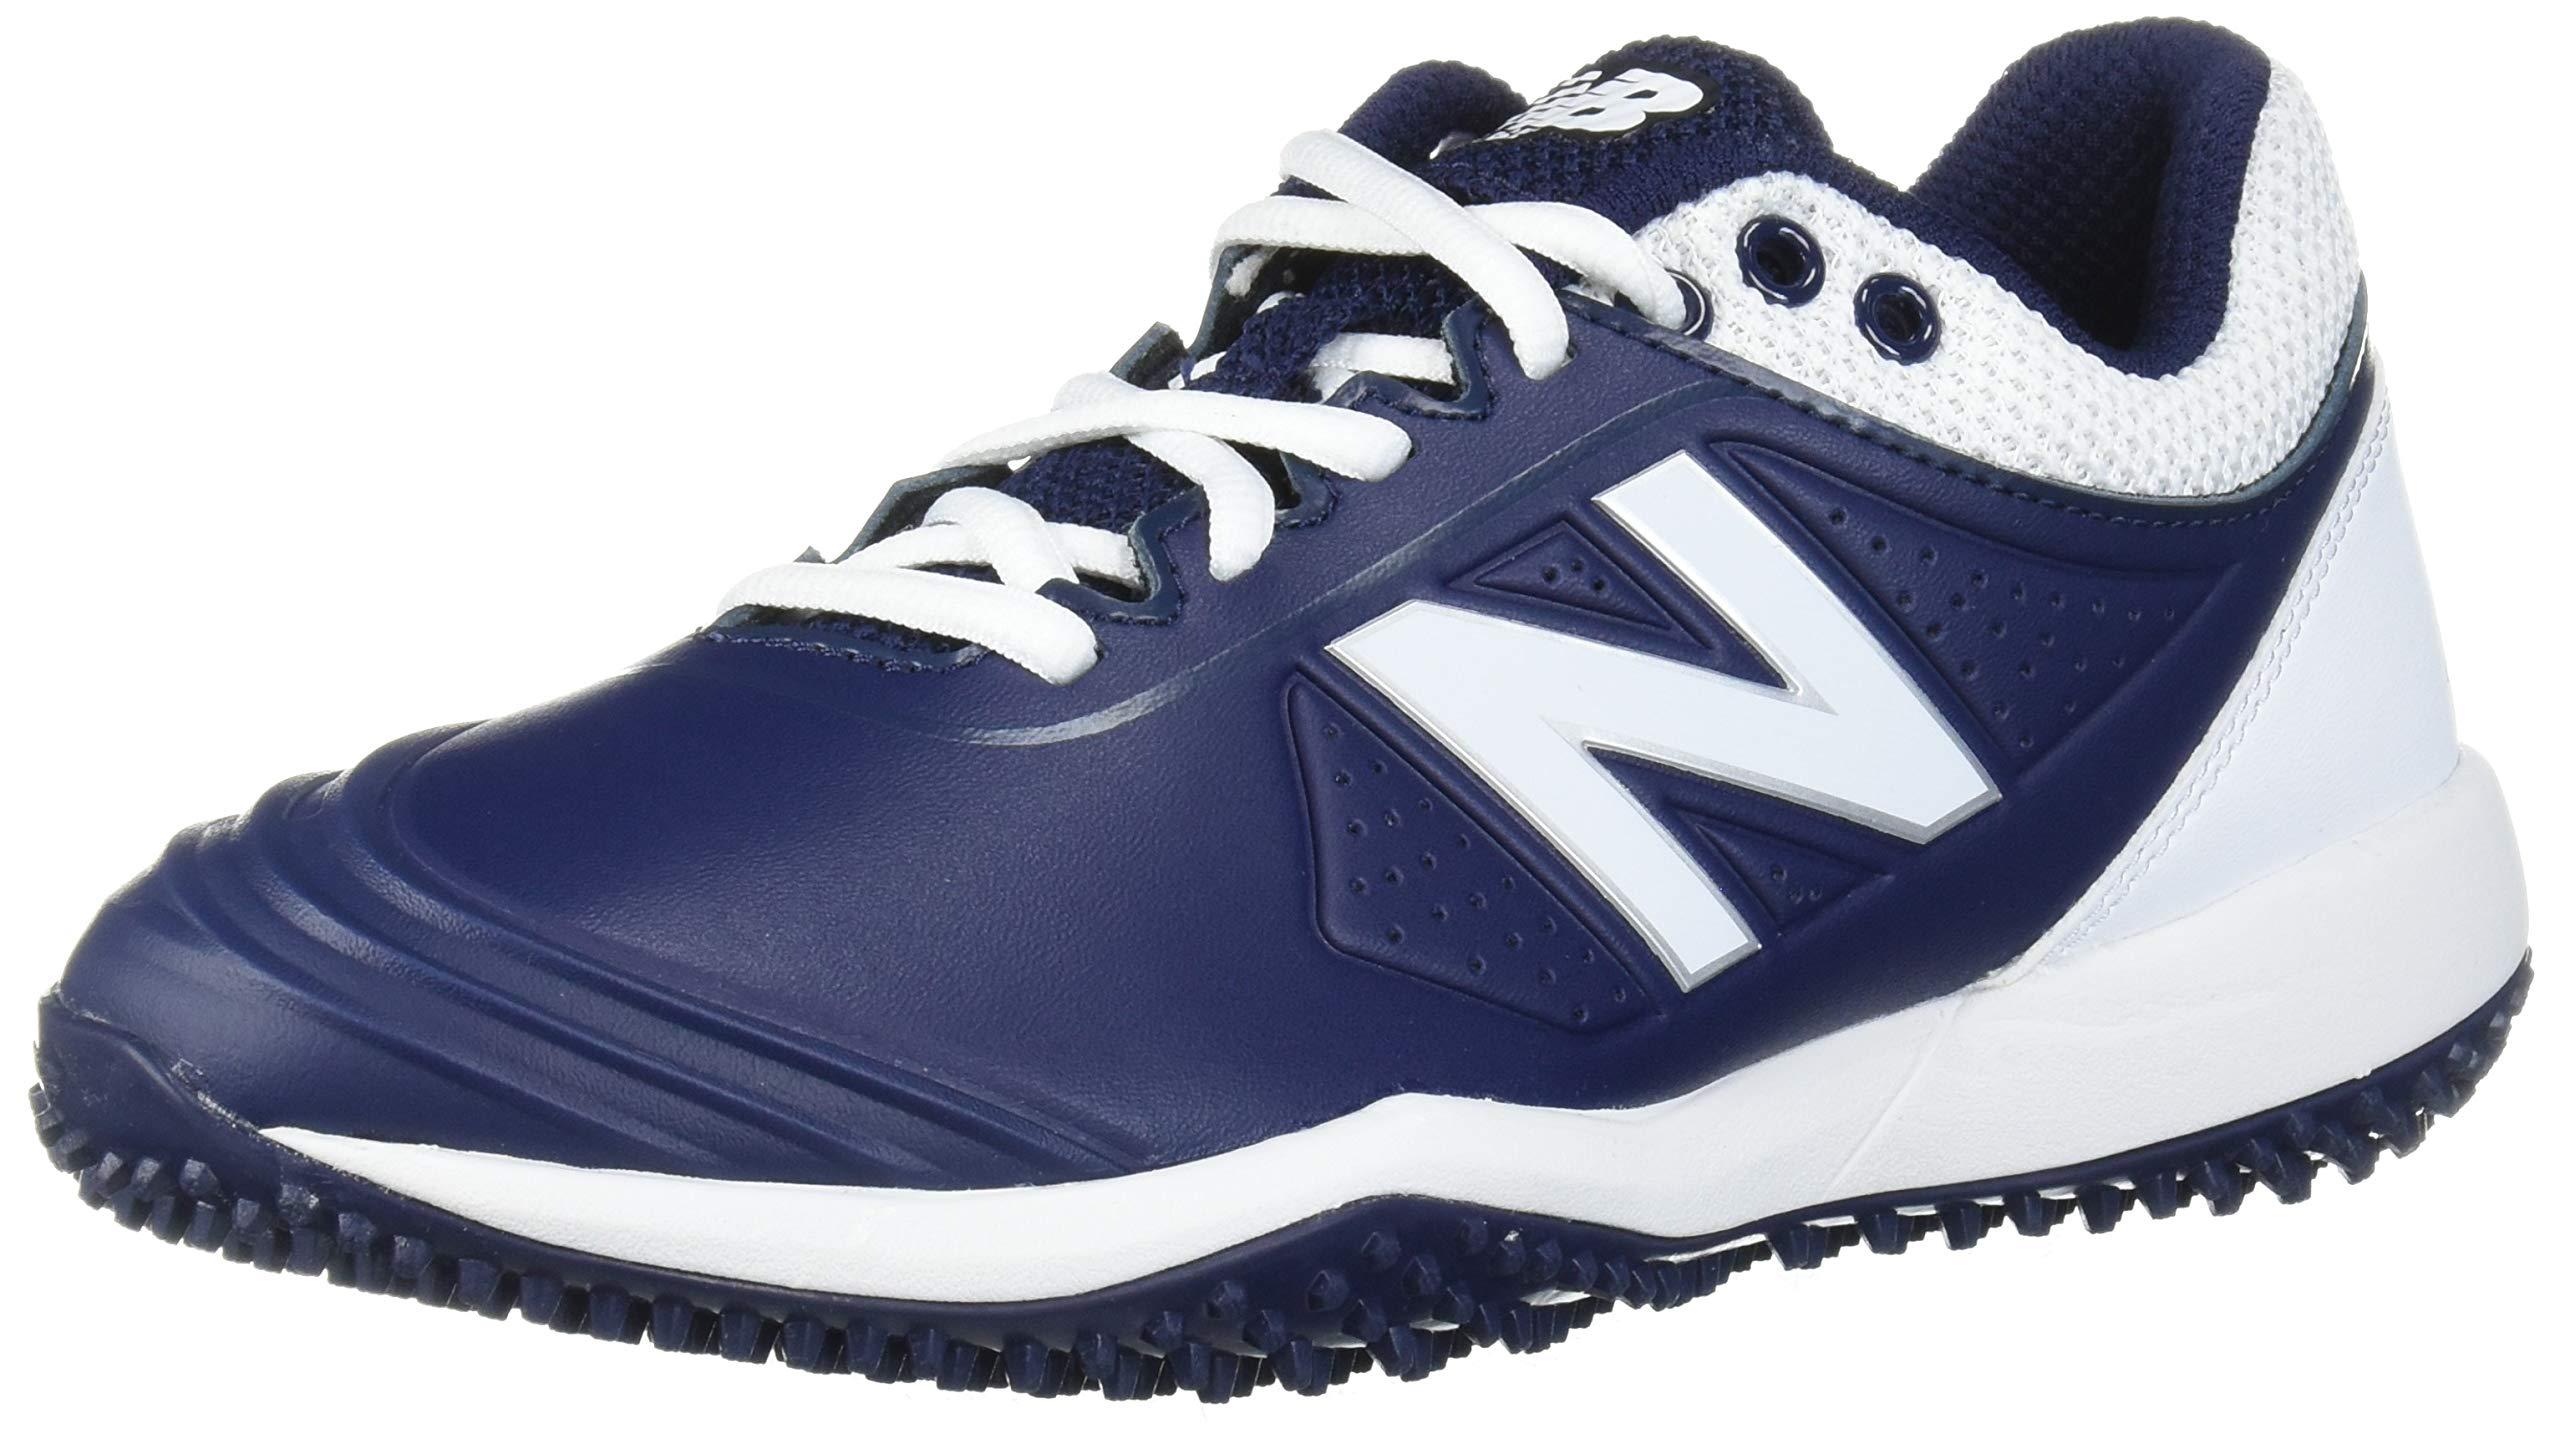 New Balance Fuse V2 Turf Baseball Shoe in Navy/White (Blue) - Save 29% |  Lyst